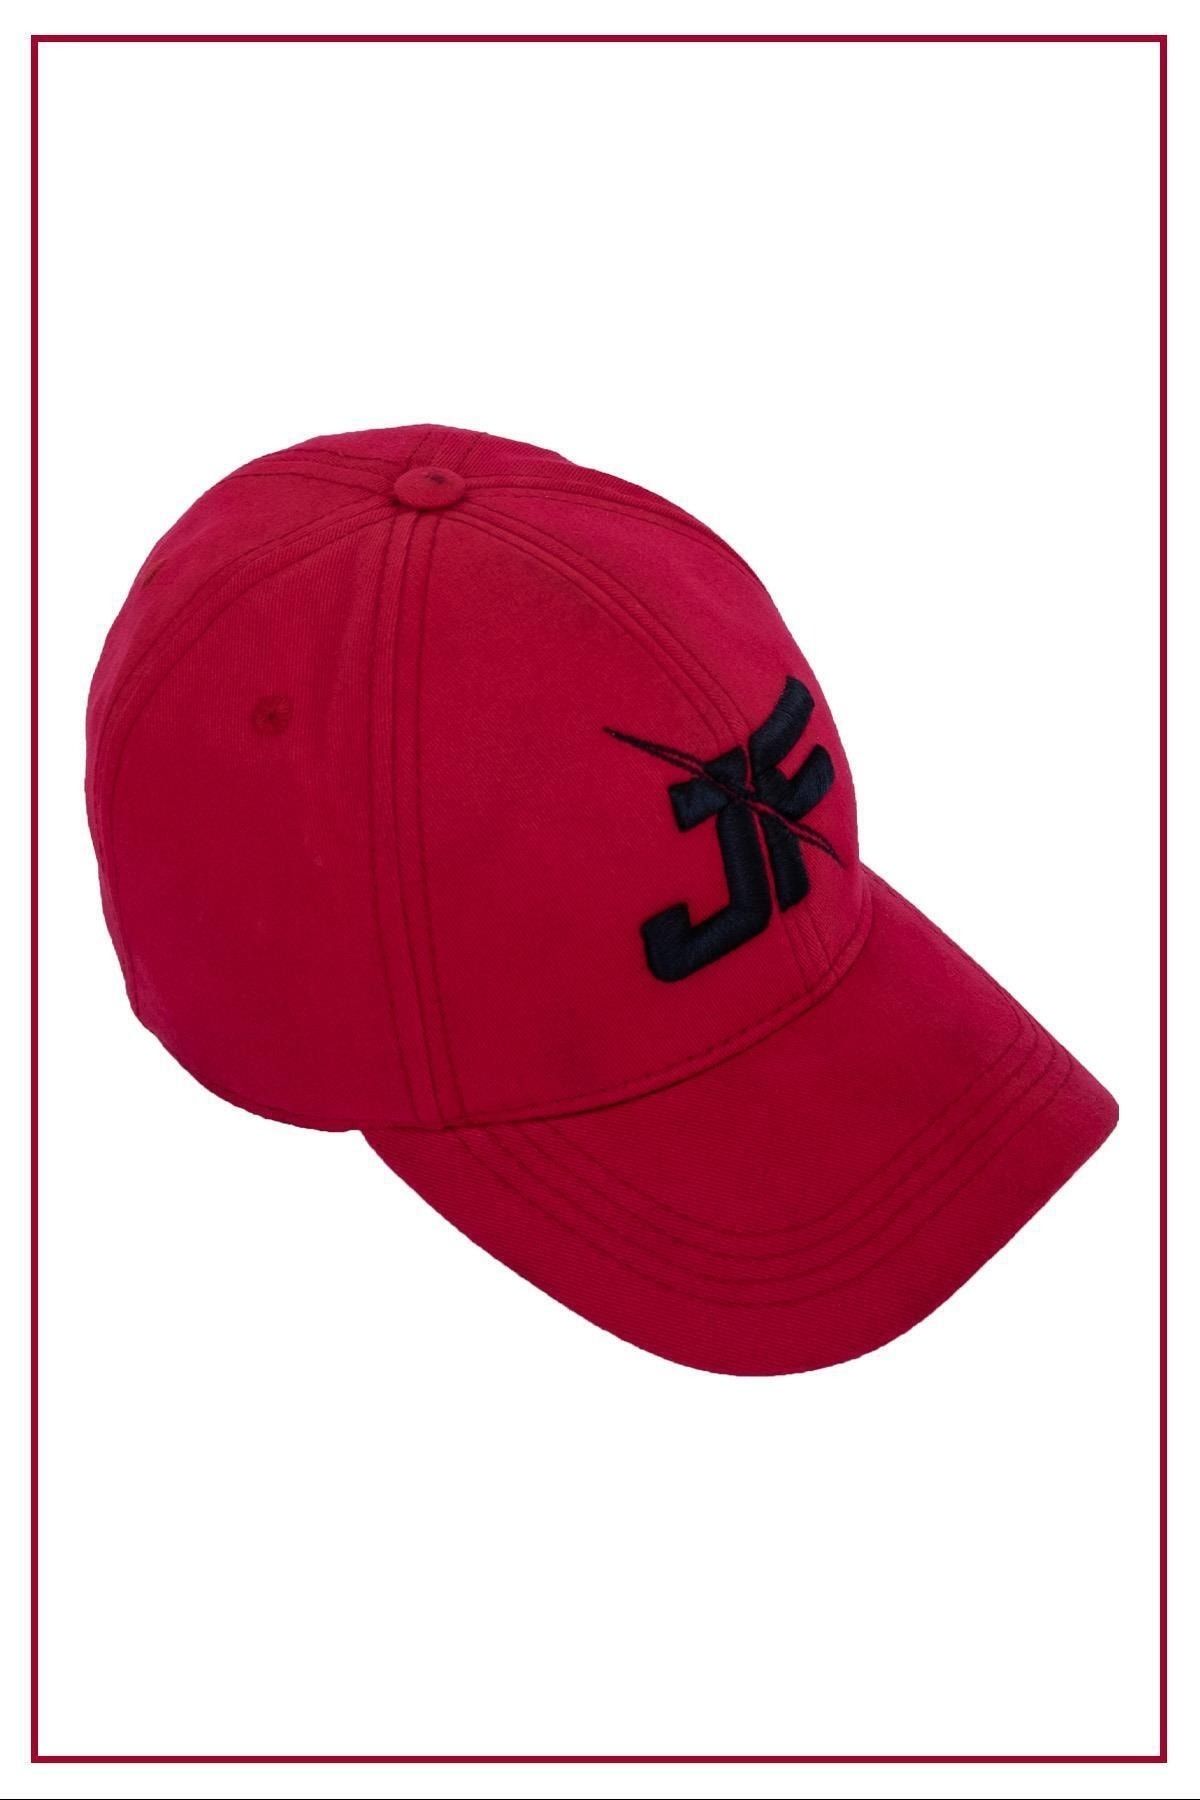 jofit Premium Sports Şapka Kırmızı-Siyah